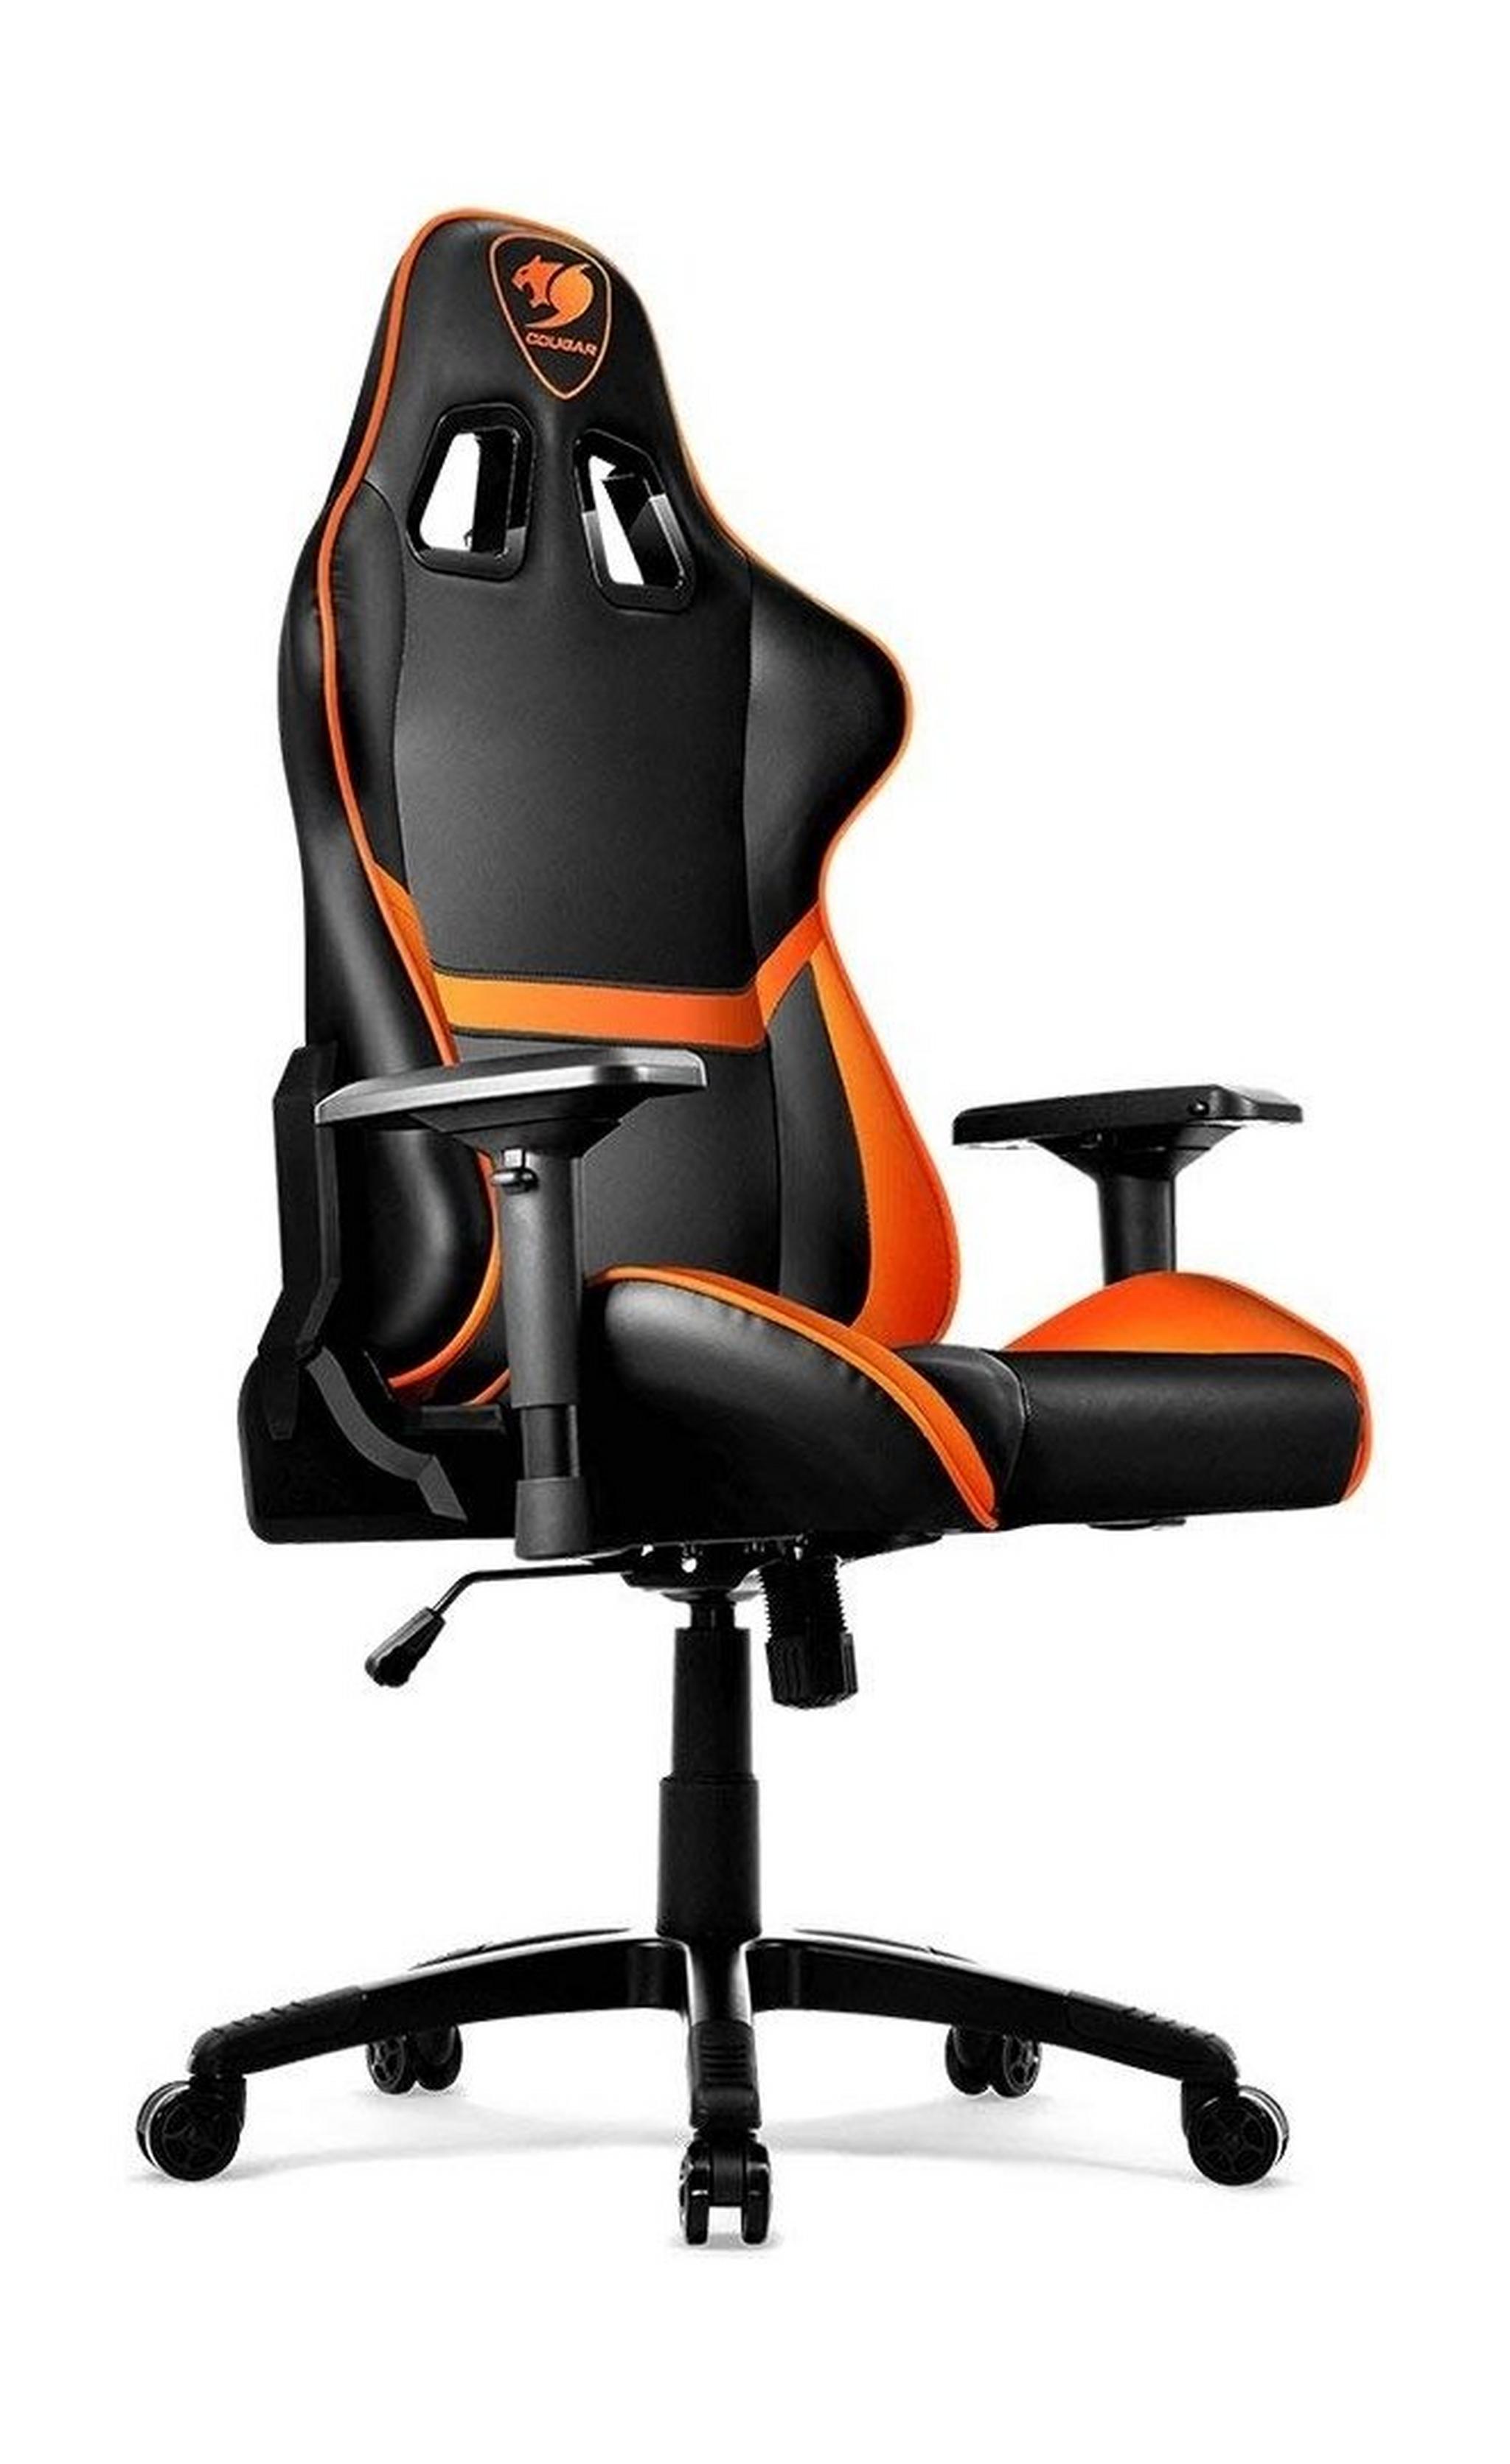 Cougar Adjustable Gaming Chair - Armor Orange